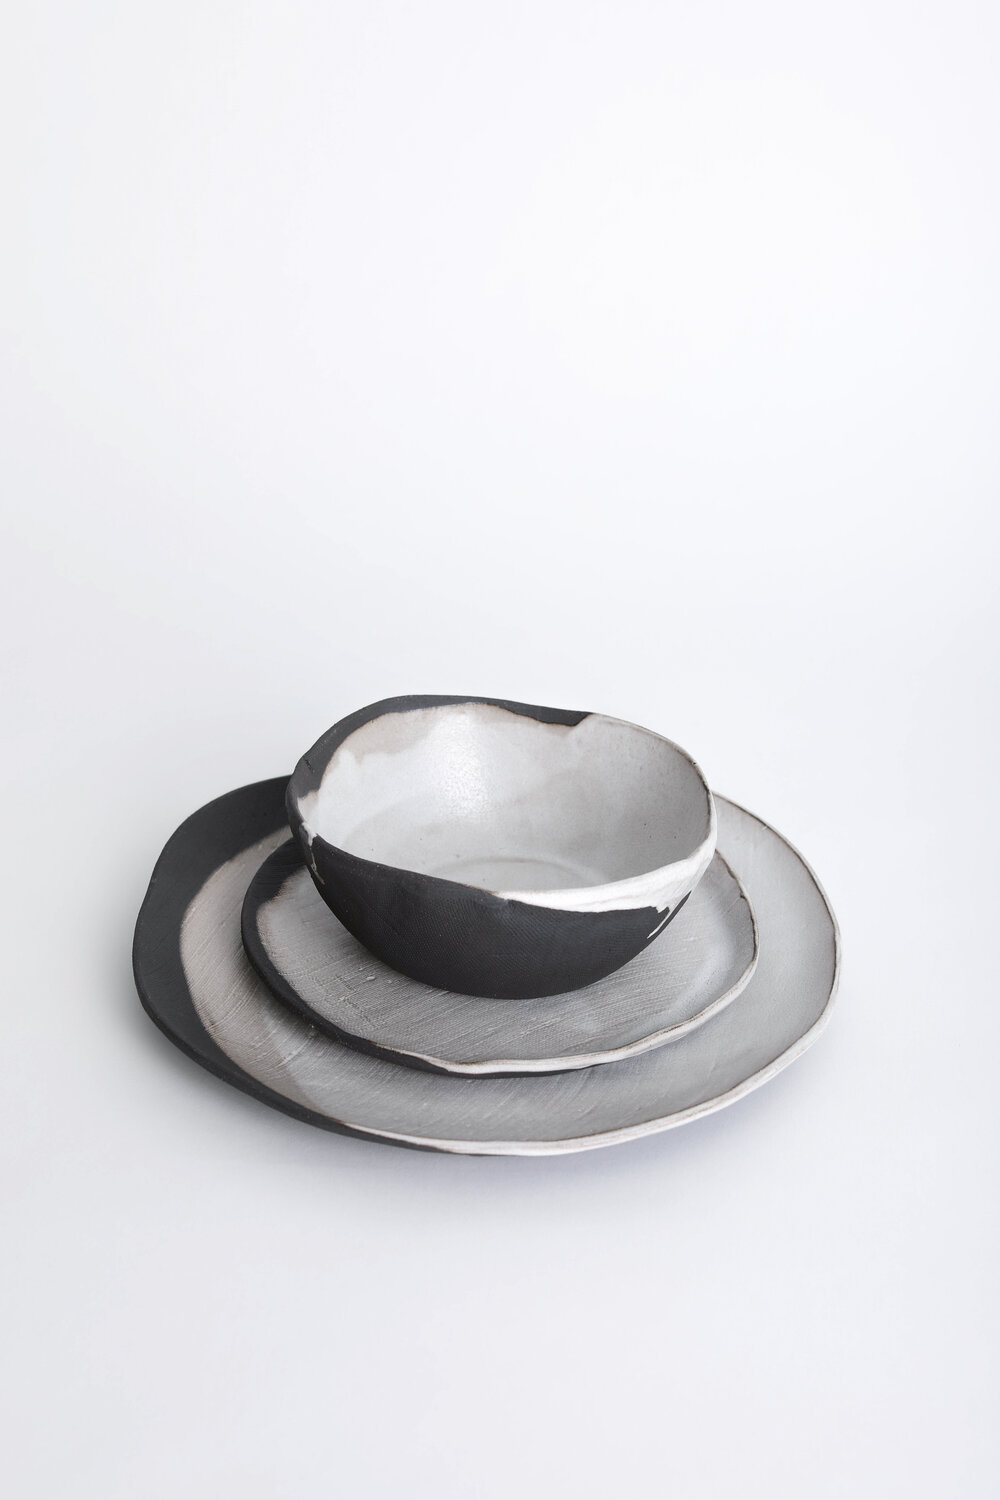 Black and White 3 Piece Dinnerware Set- Tagliaferro Ceramics